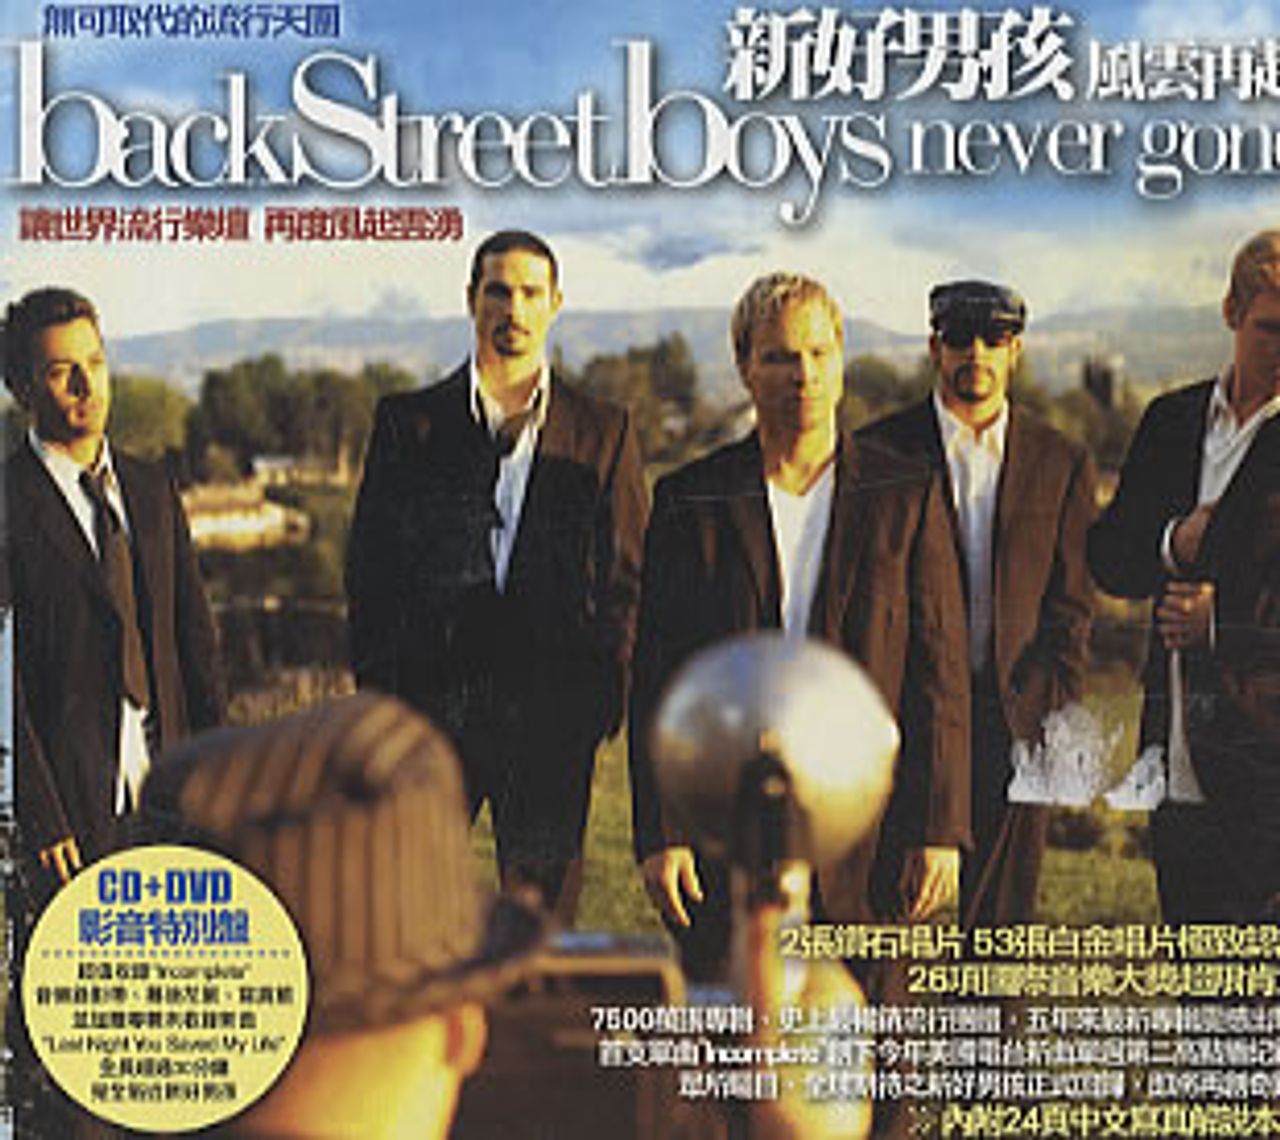 Backstreet Boys Never Gone Taiwanese 2-disc CD/DVD set